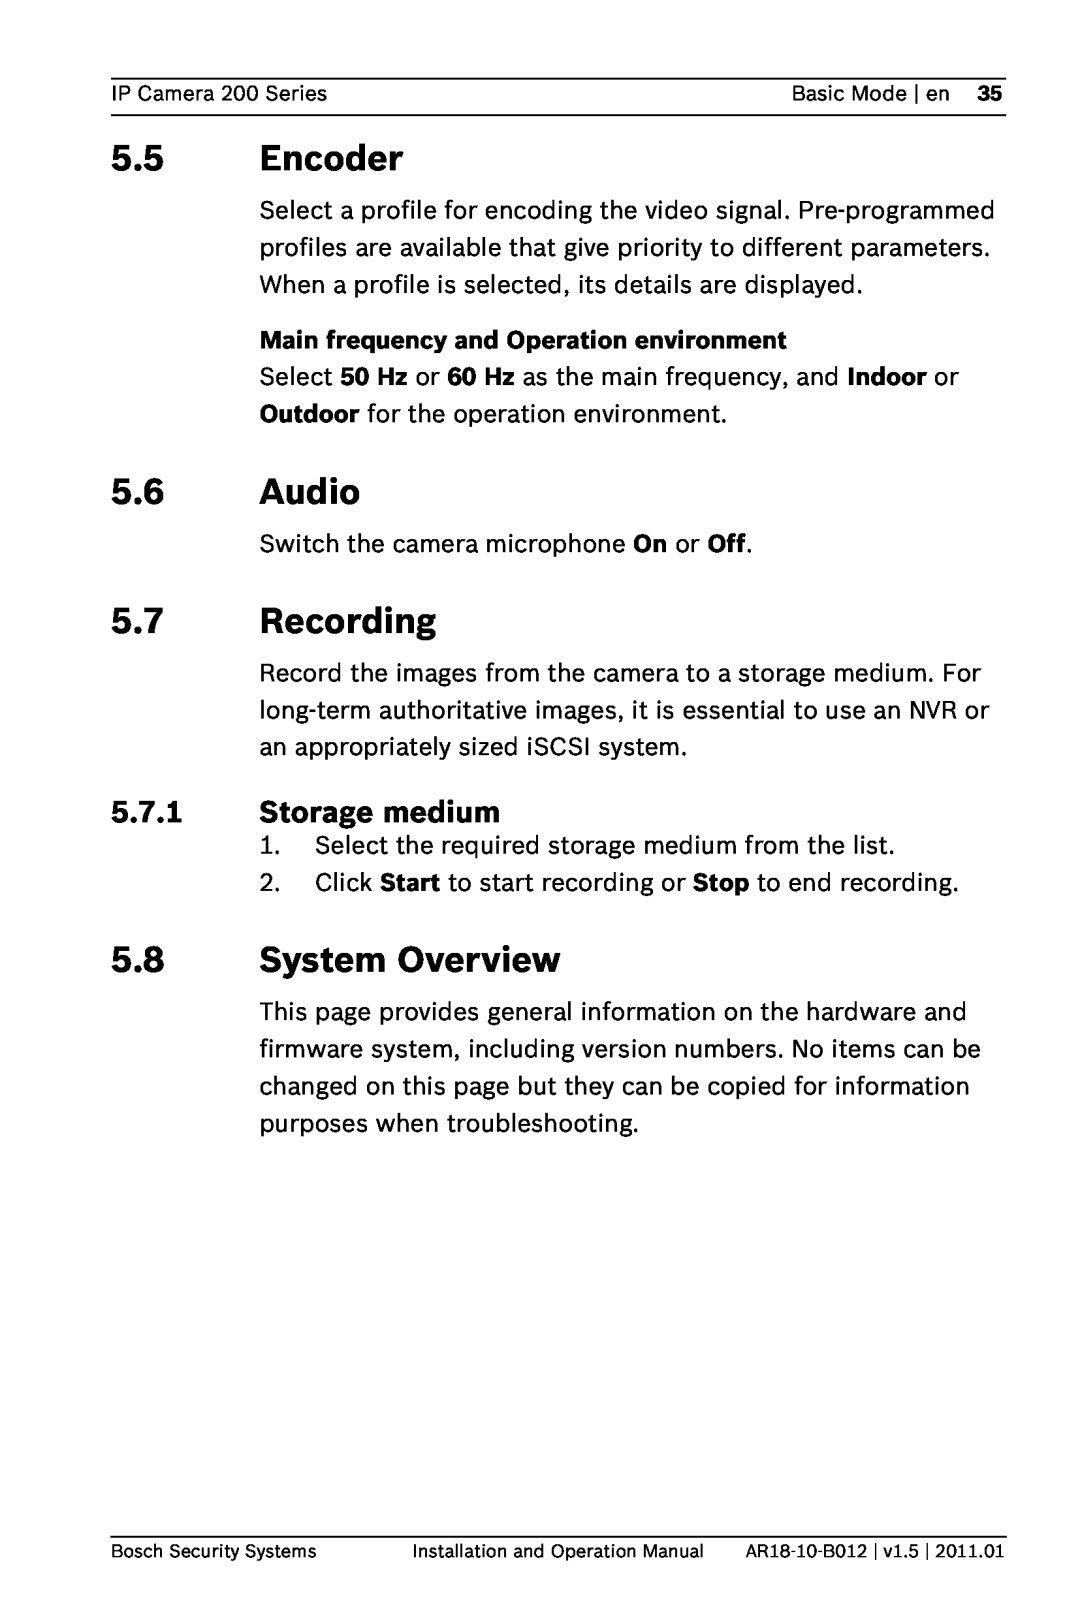 Bosch Appliances NDC-265-P operation manual Encoder, Audio, Recording, System Overview, Storage medium 